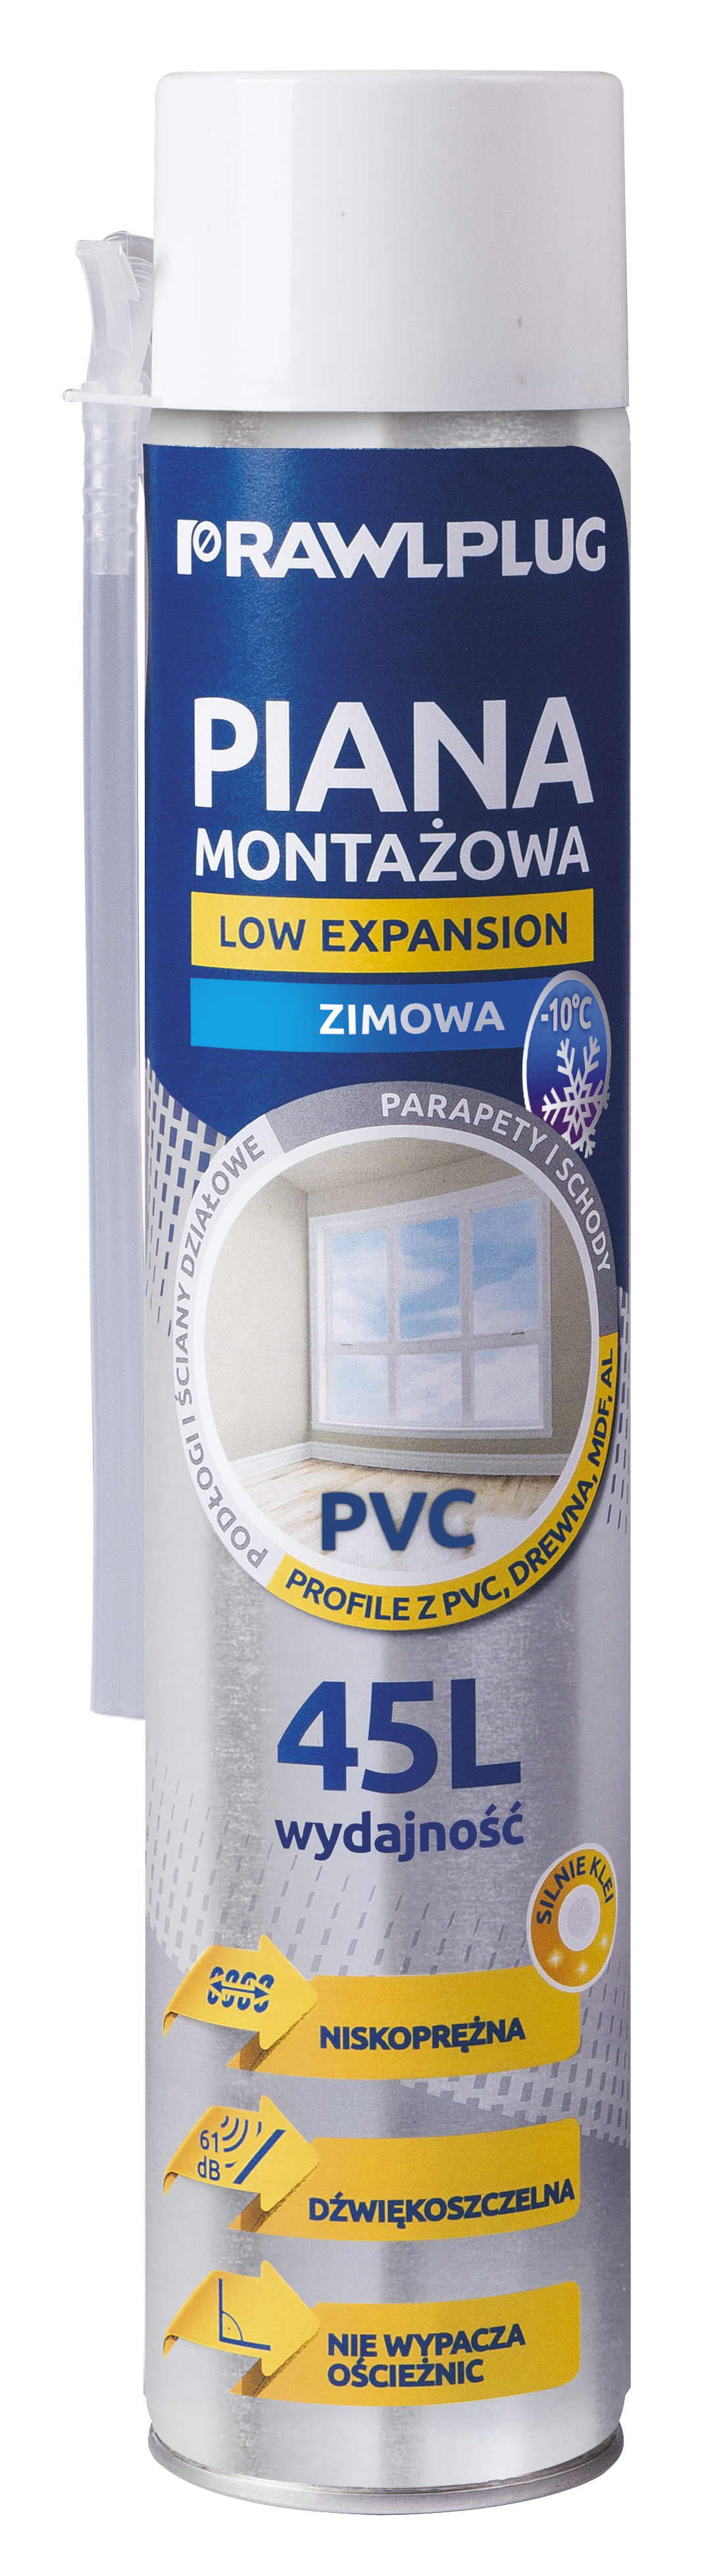 RPS-PVC-W Hand Held Polyurethane Foam for PVC - Winter version